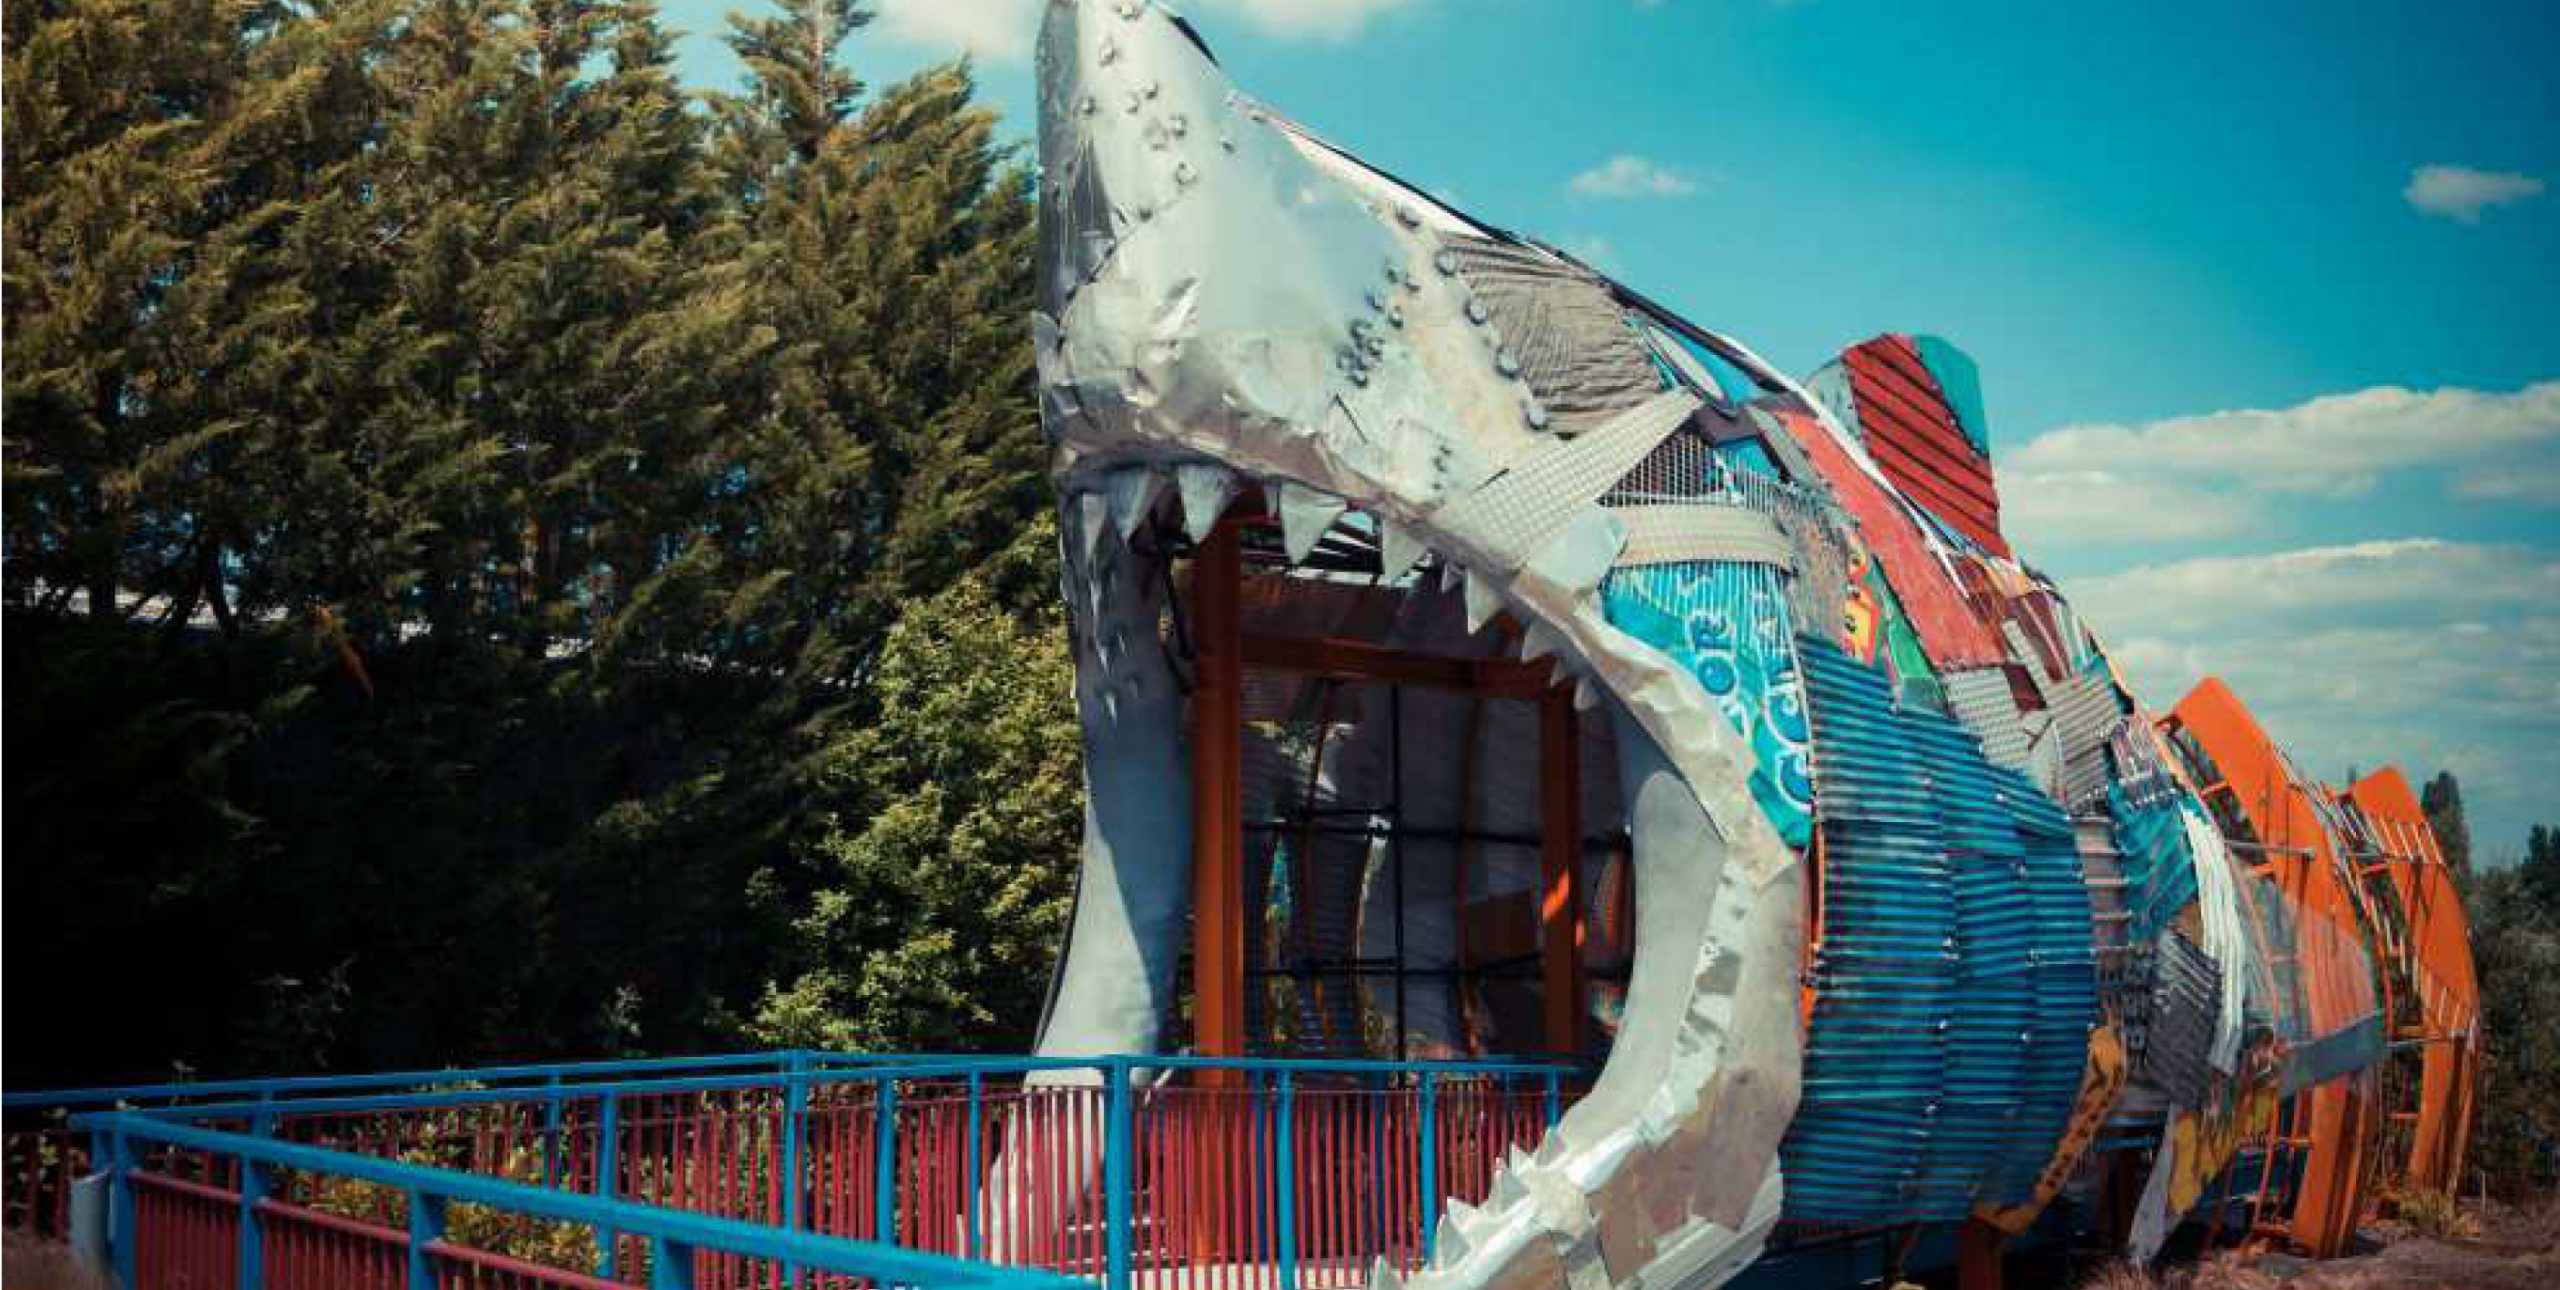 Metal shark entrance way side